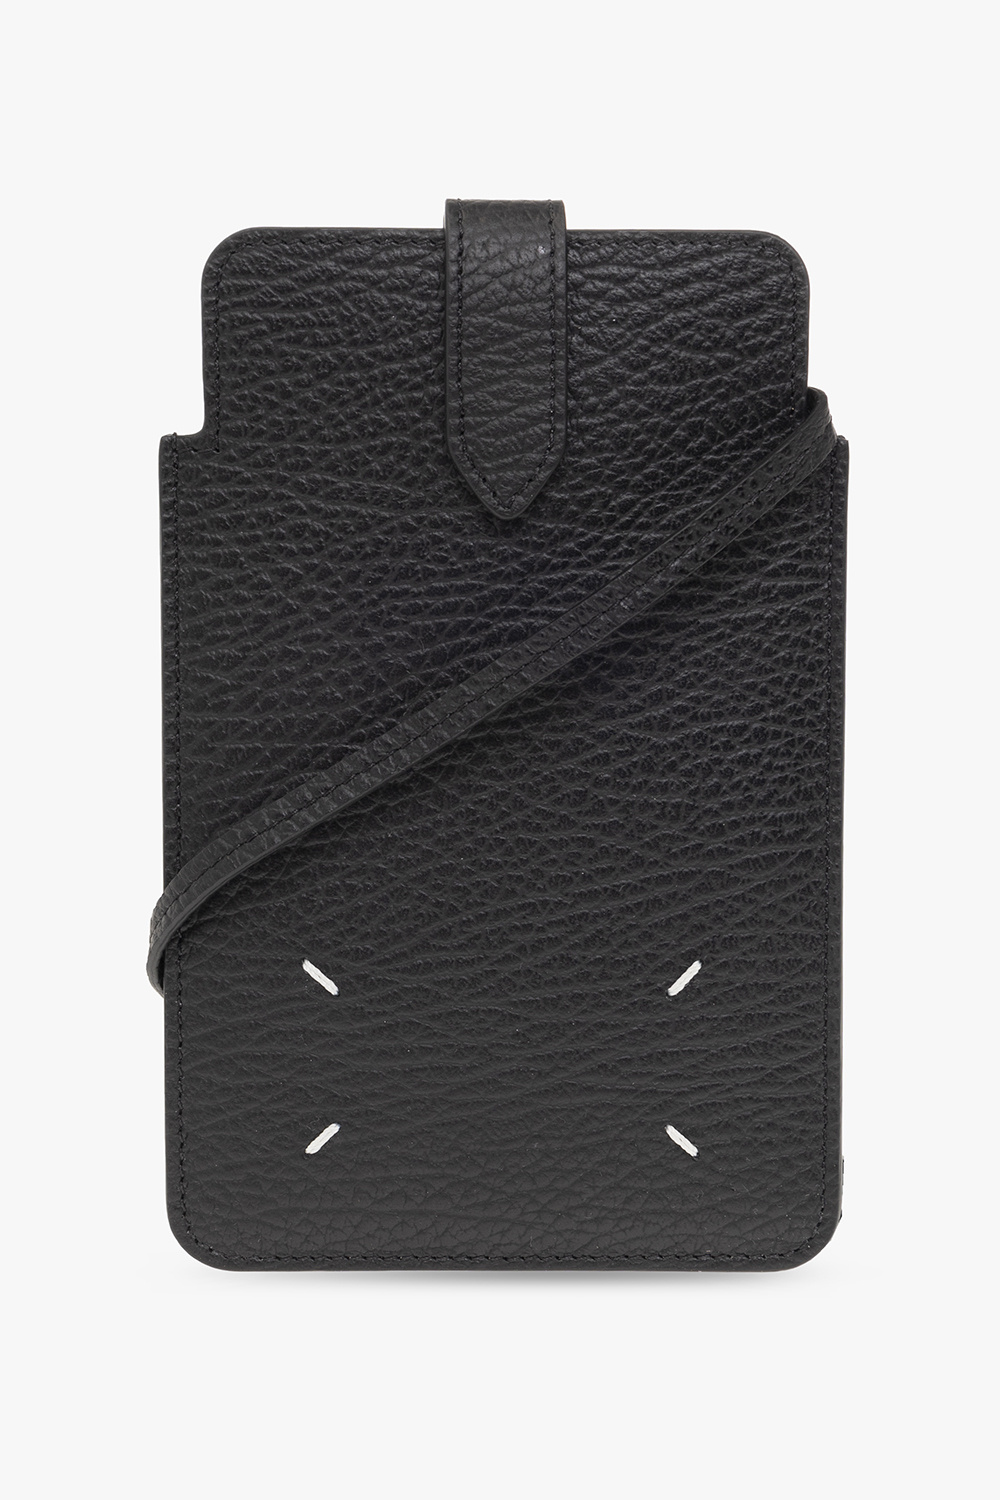 Maison Margiela Phone pouch with strap | Men's Accessorie